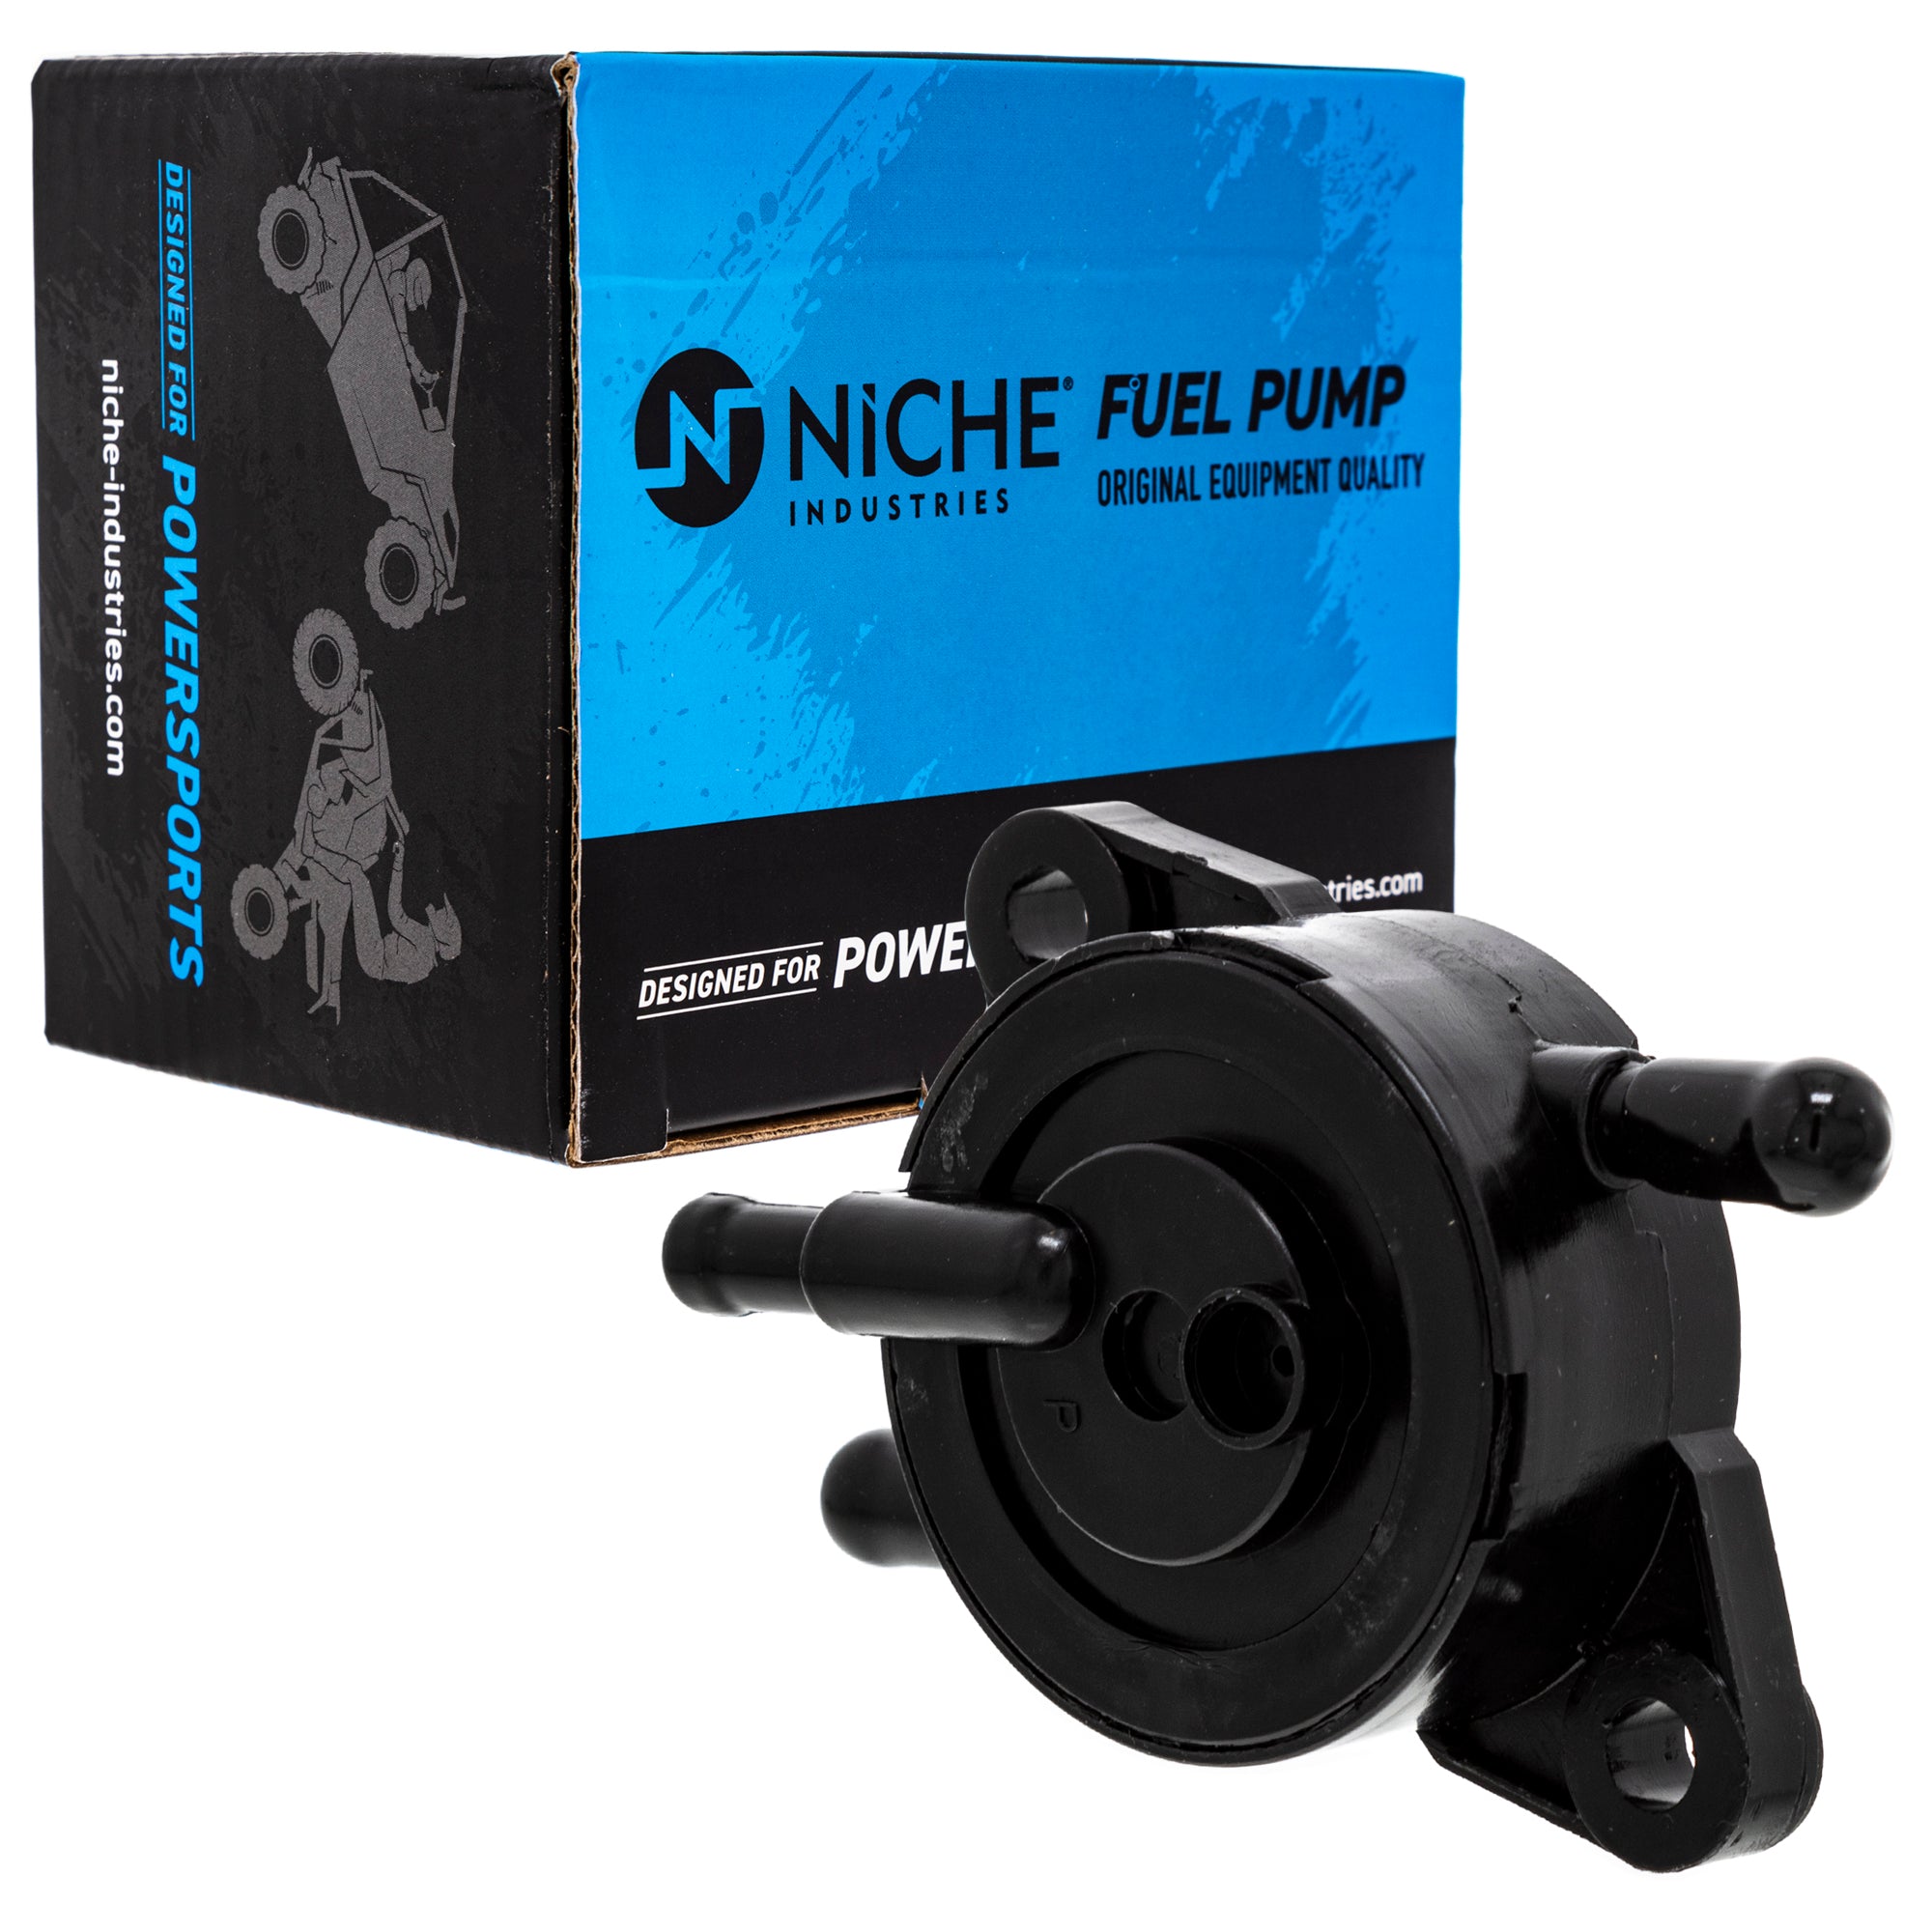 Fuel Pump Kit for zOTHER Arctic Cat Textron Mule Cat Brute NICHE 519-CFP2228A